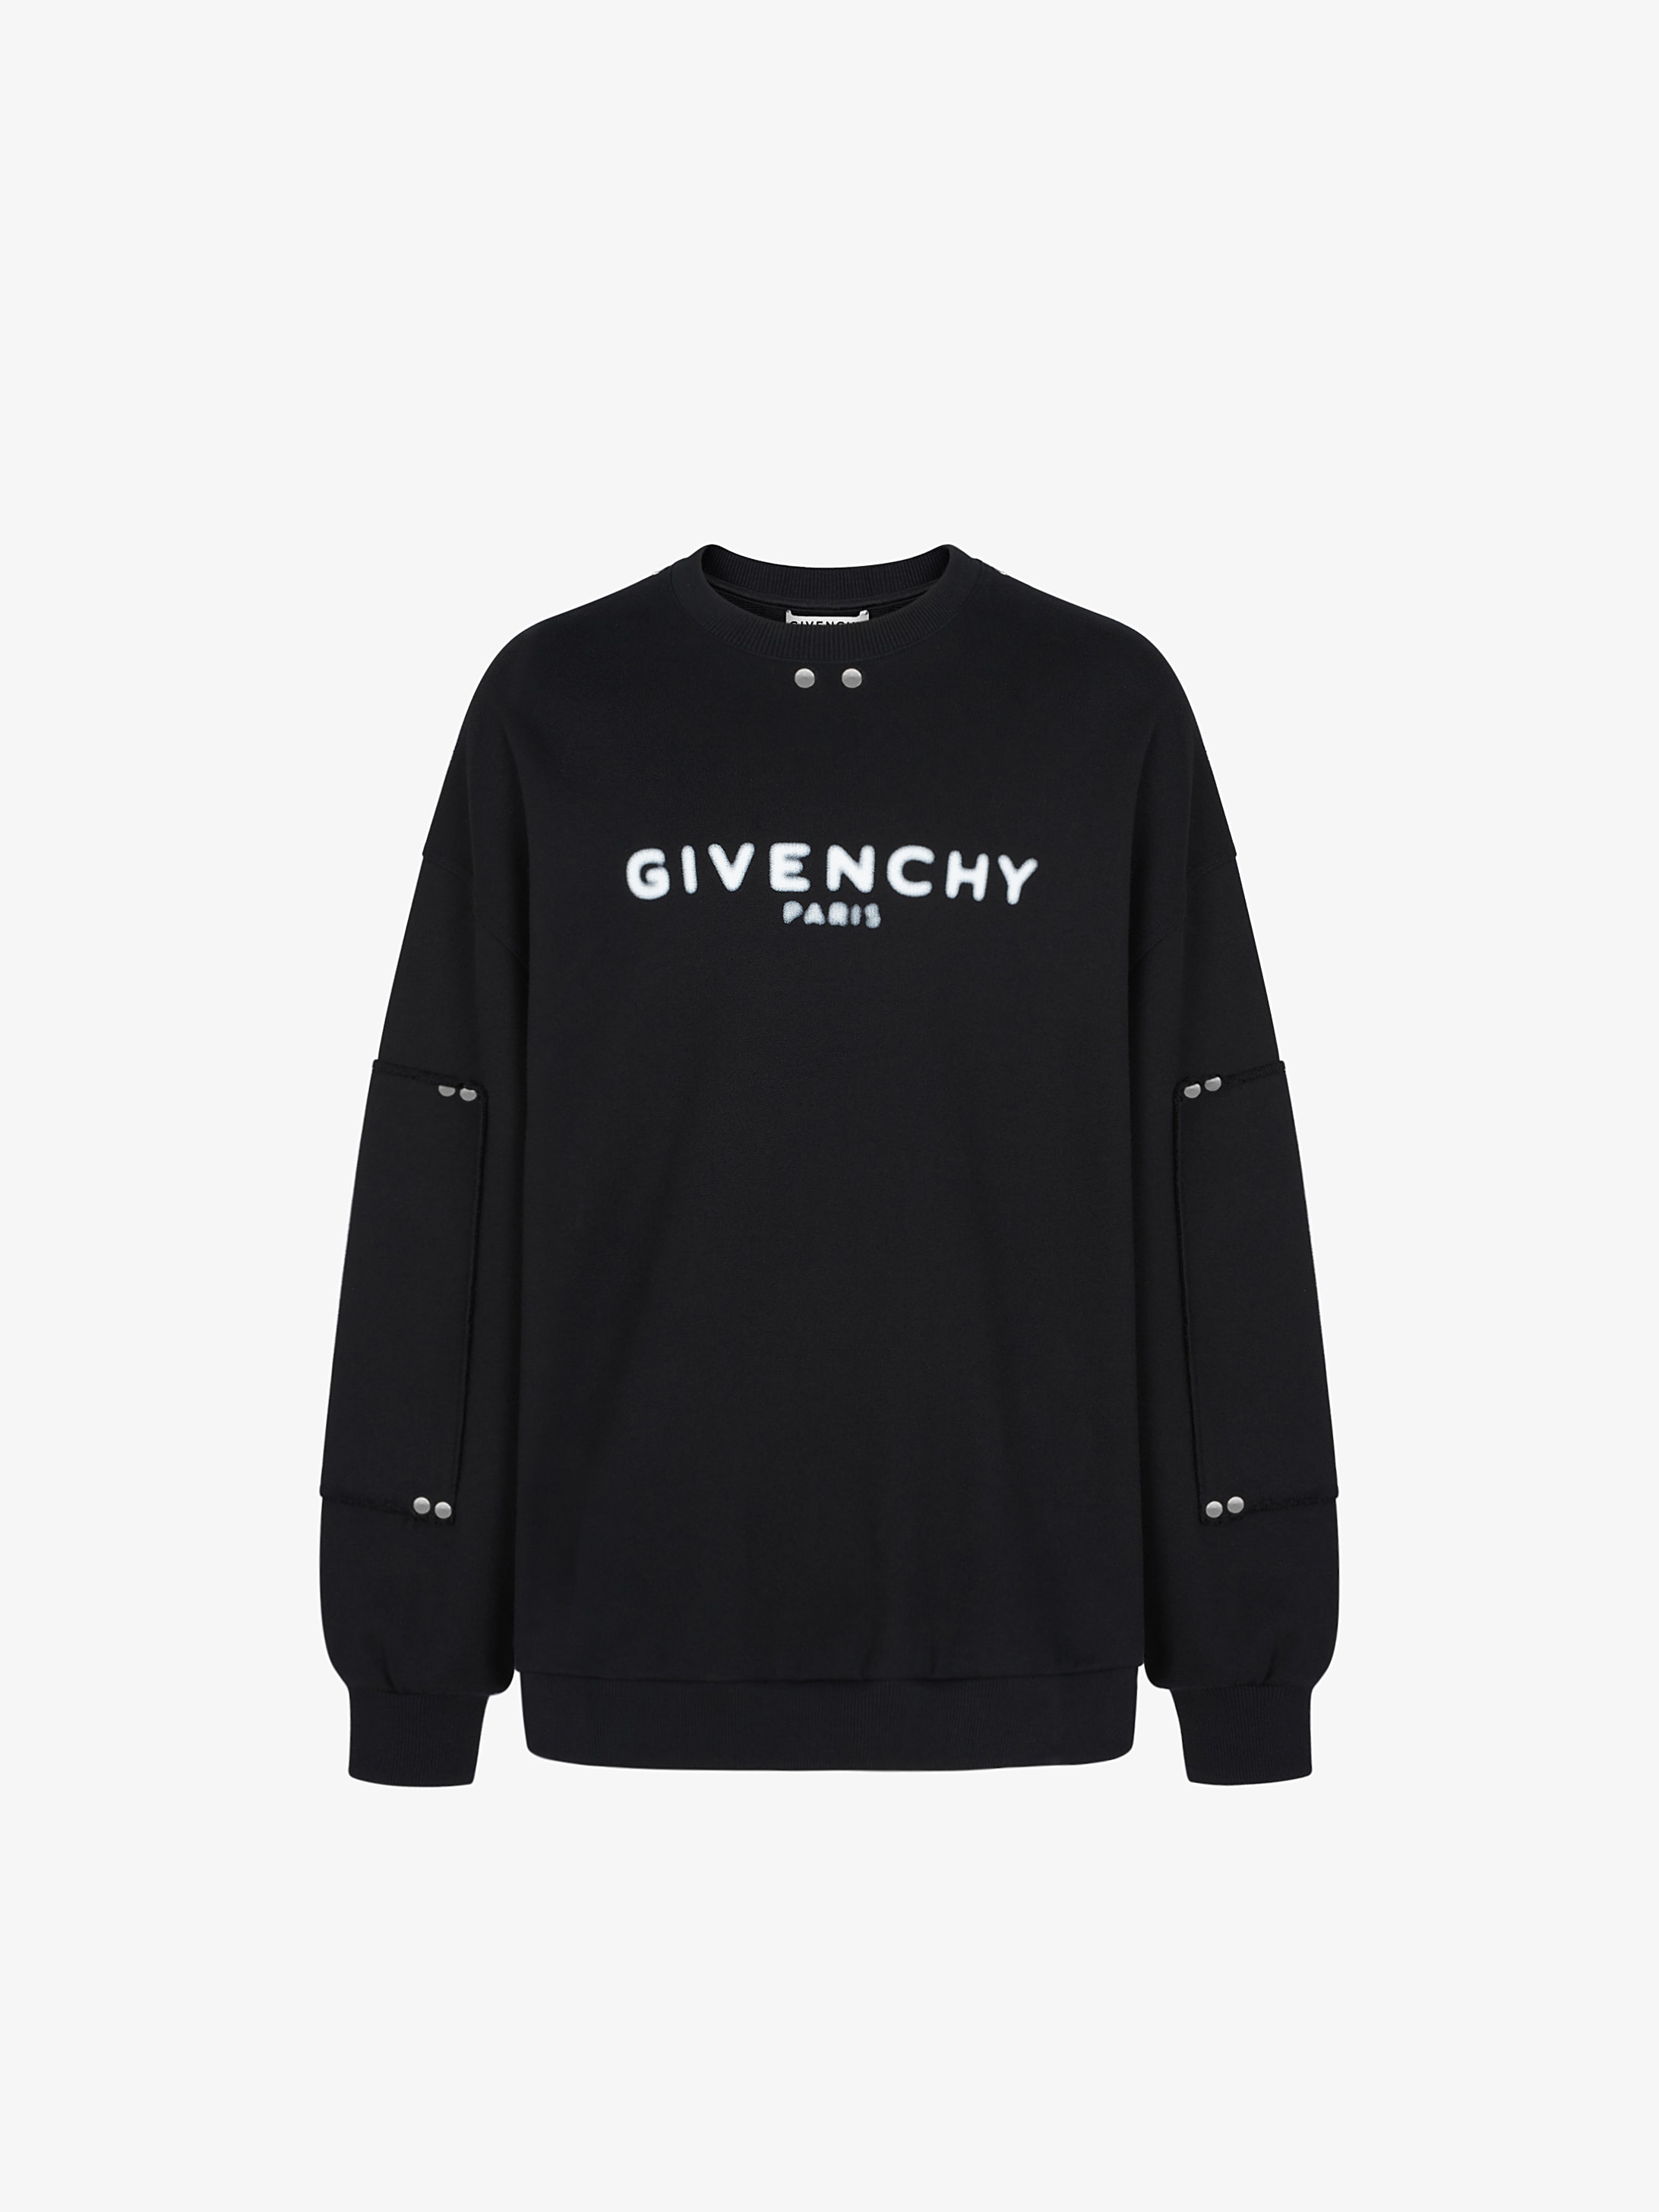 black and white givenchy sweatshirt